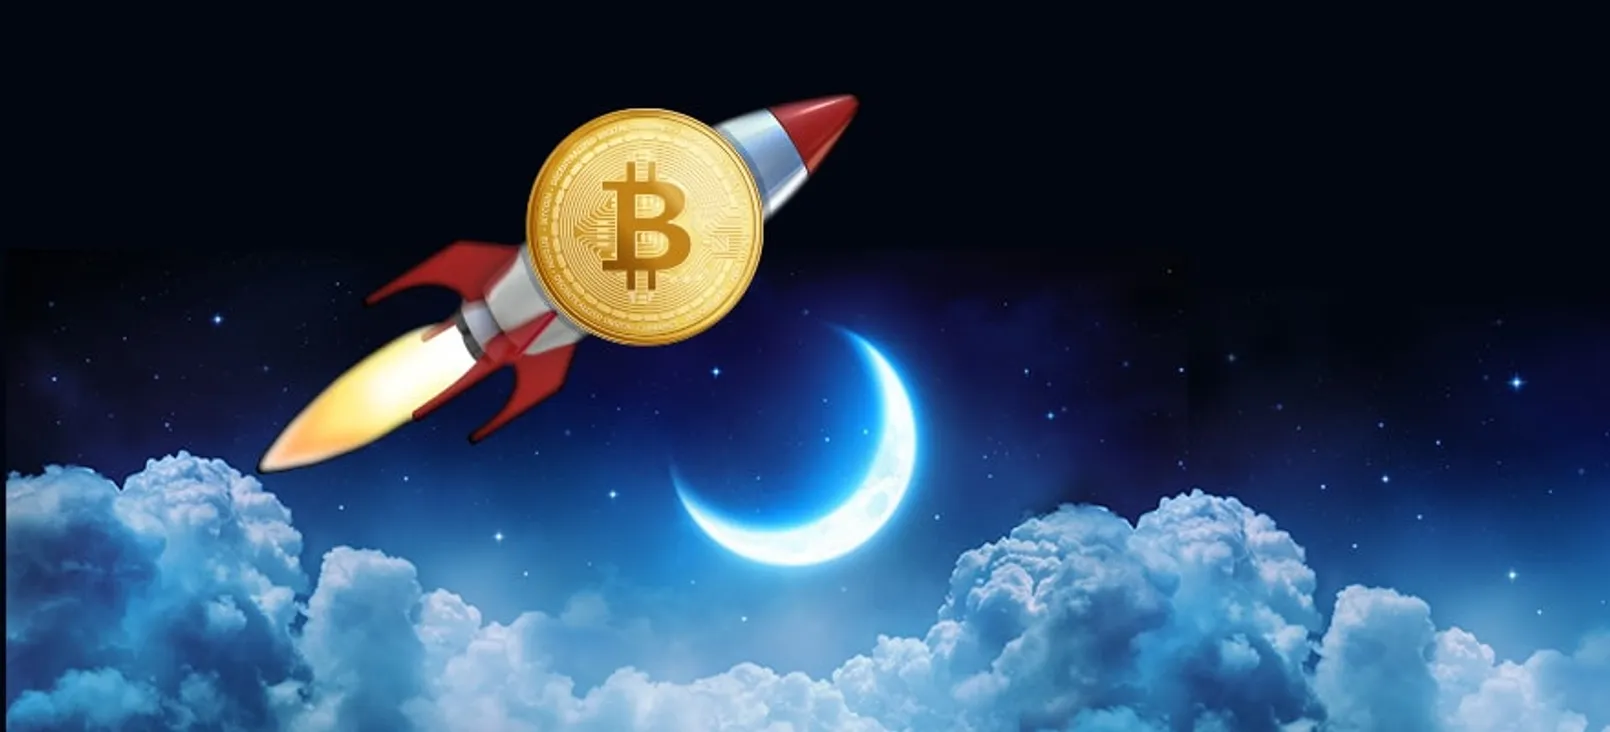 Bitcoin Going Over the Moon .jpg